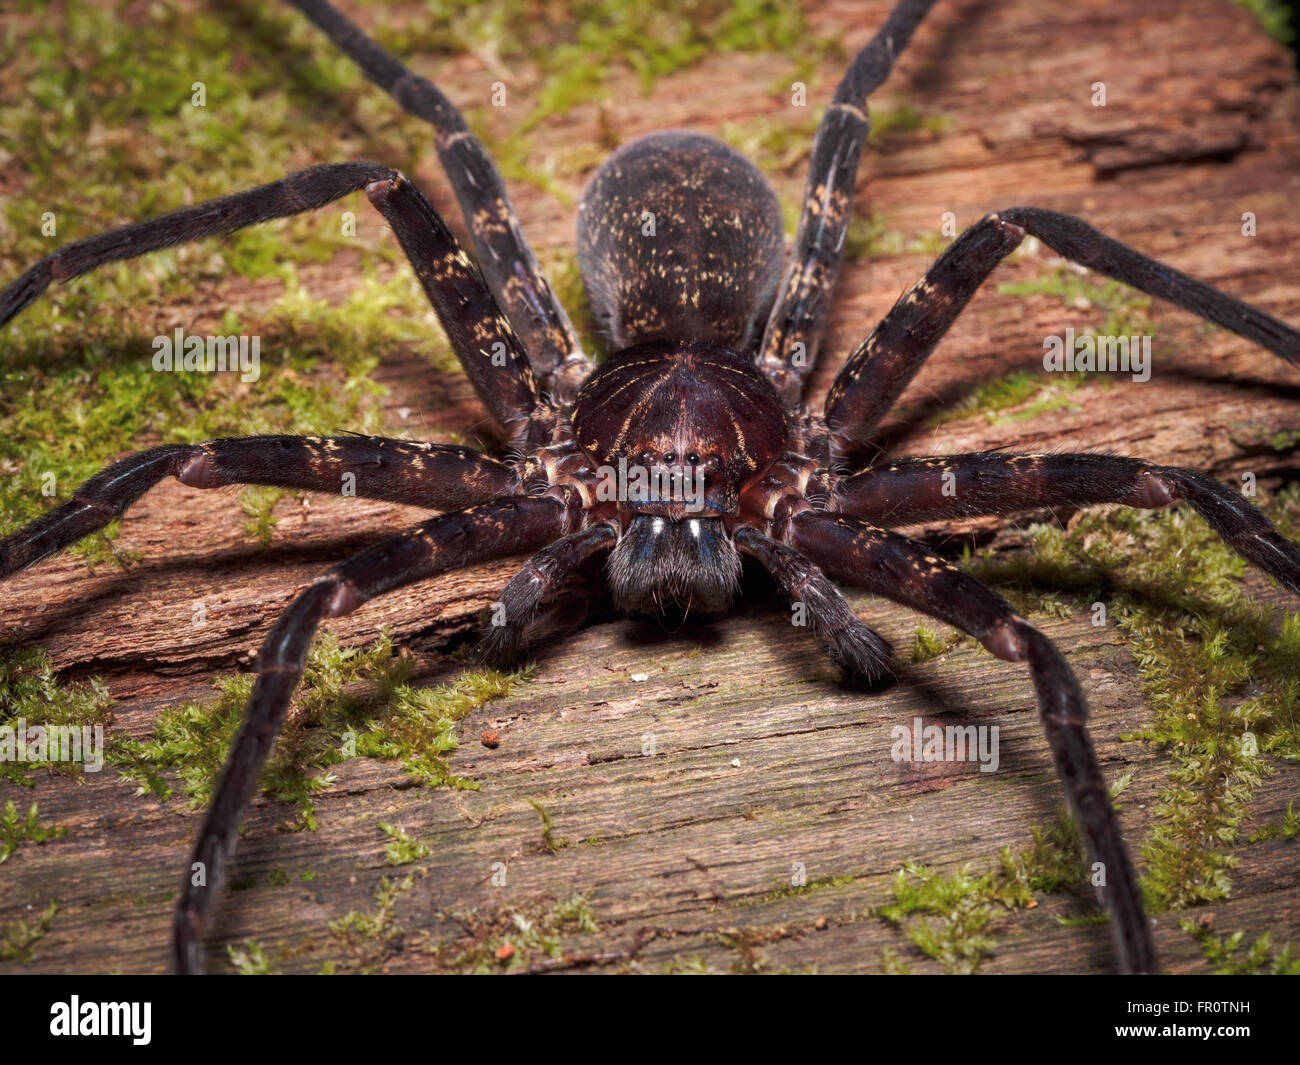 Huntsman Spinne (Sparassidae SP.), Bako Nationalpark, Borneo, Malaysia  Stockfotografie - Alamy